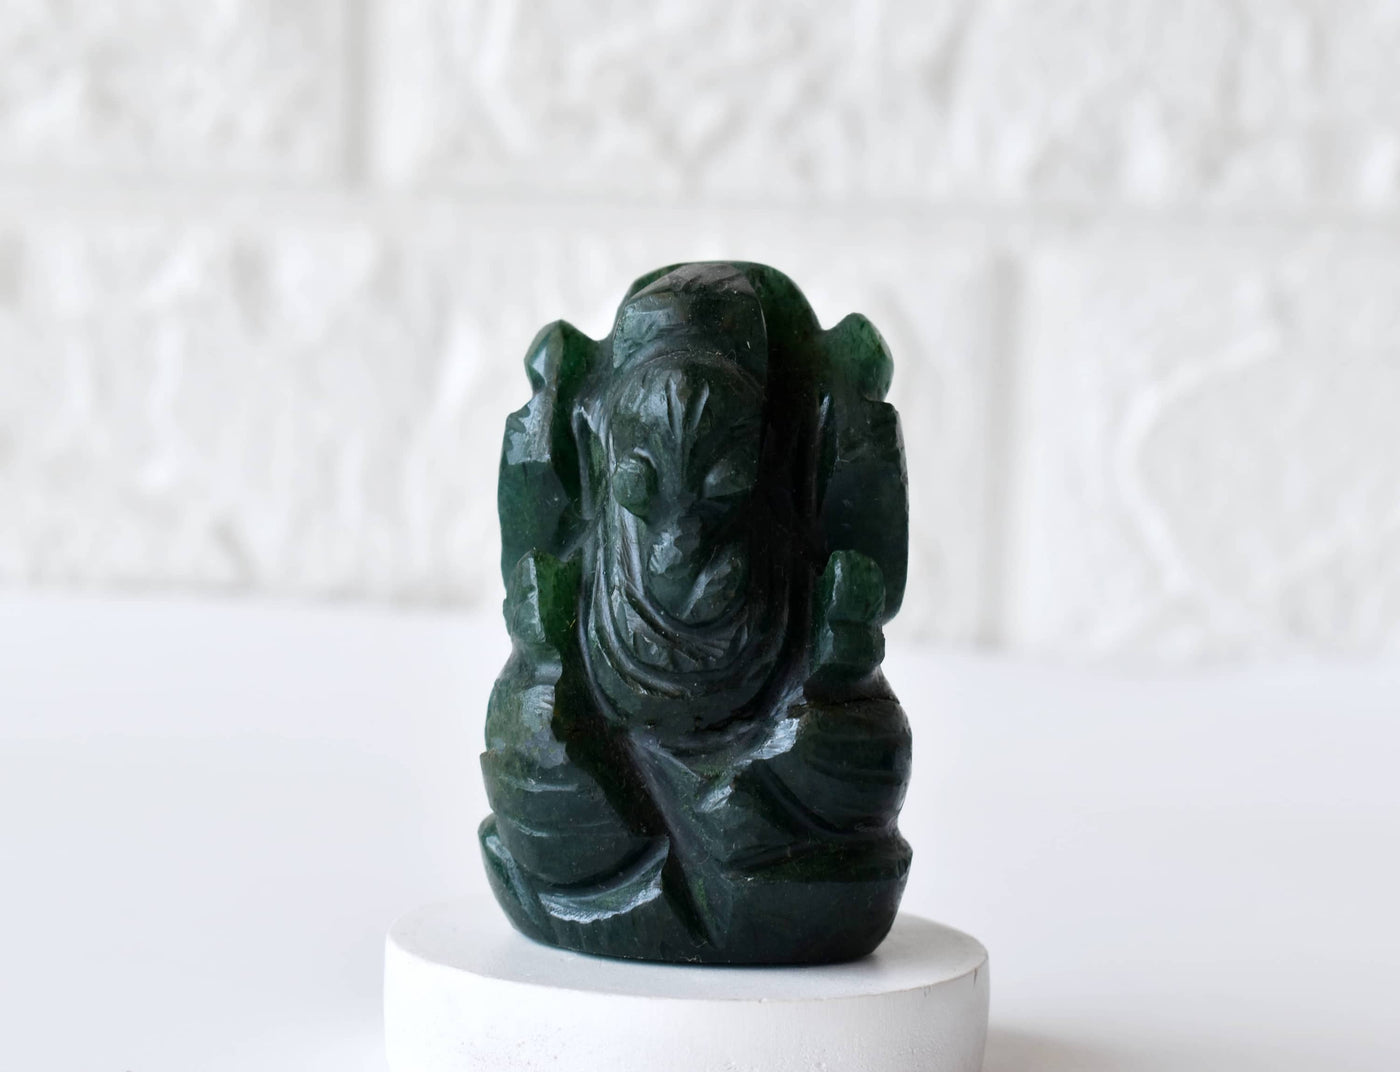 Green Jade Ganesha Statue (Wisdom and Balance)